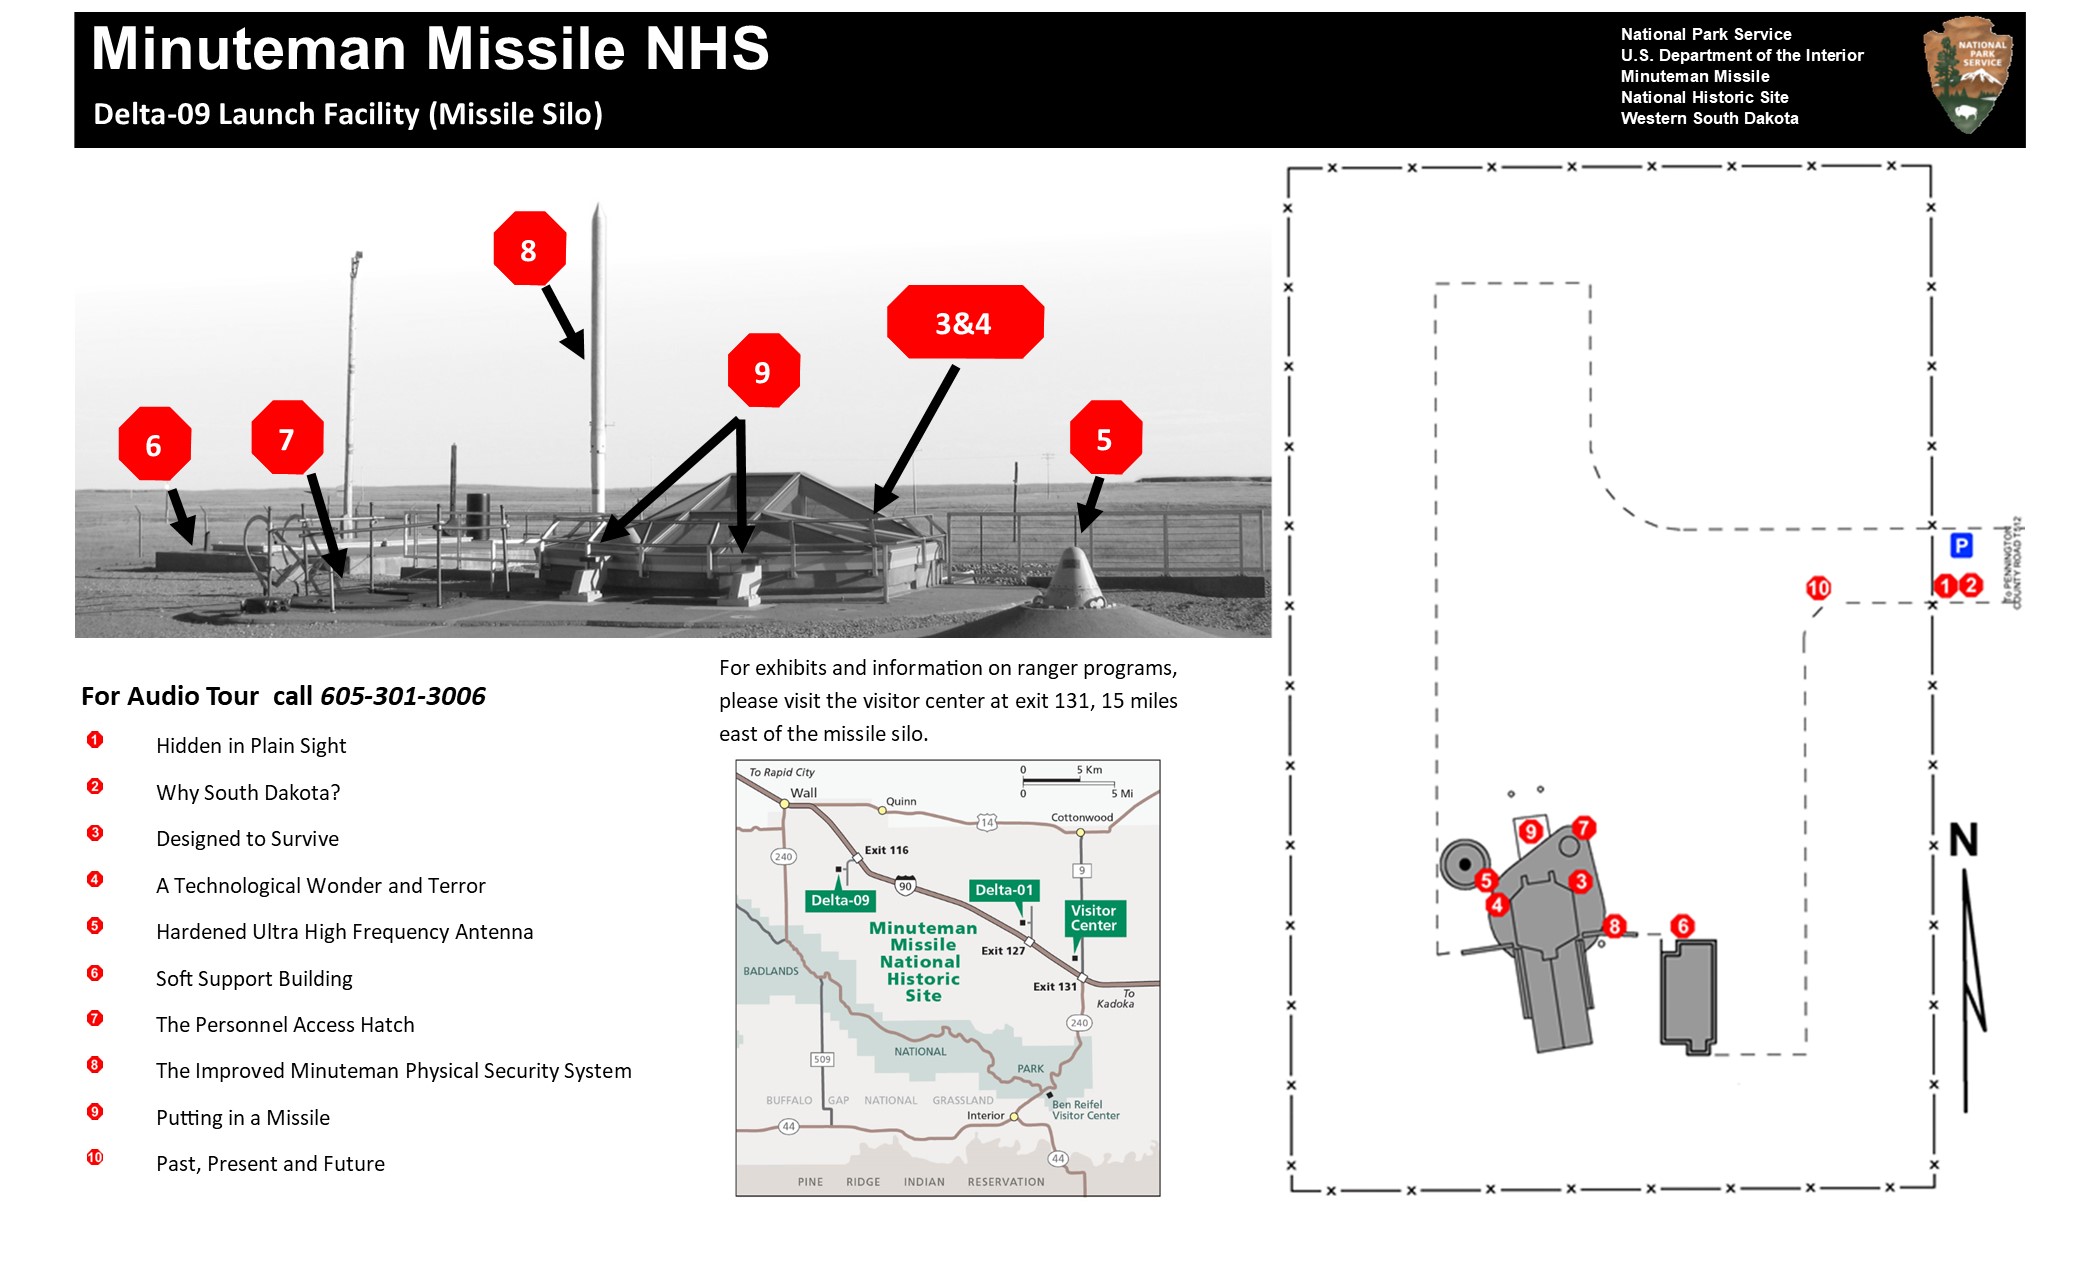 Audio Tours - Minuteman Missile National Historic Site (U.S. National Park Service)